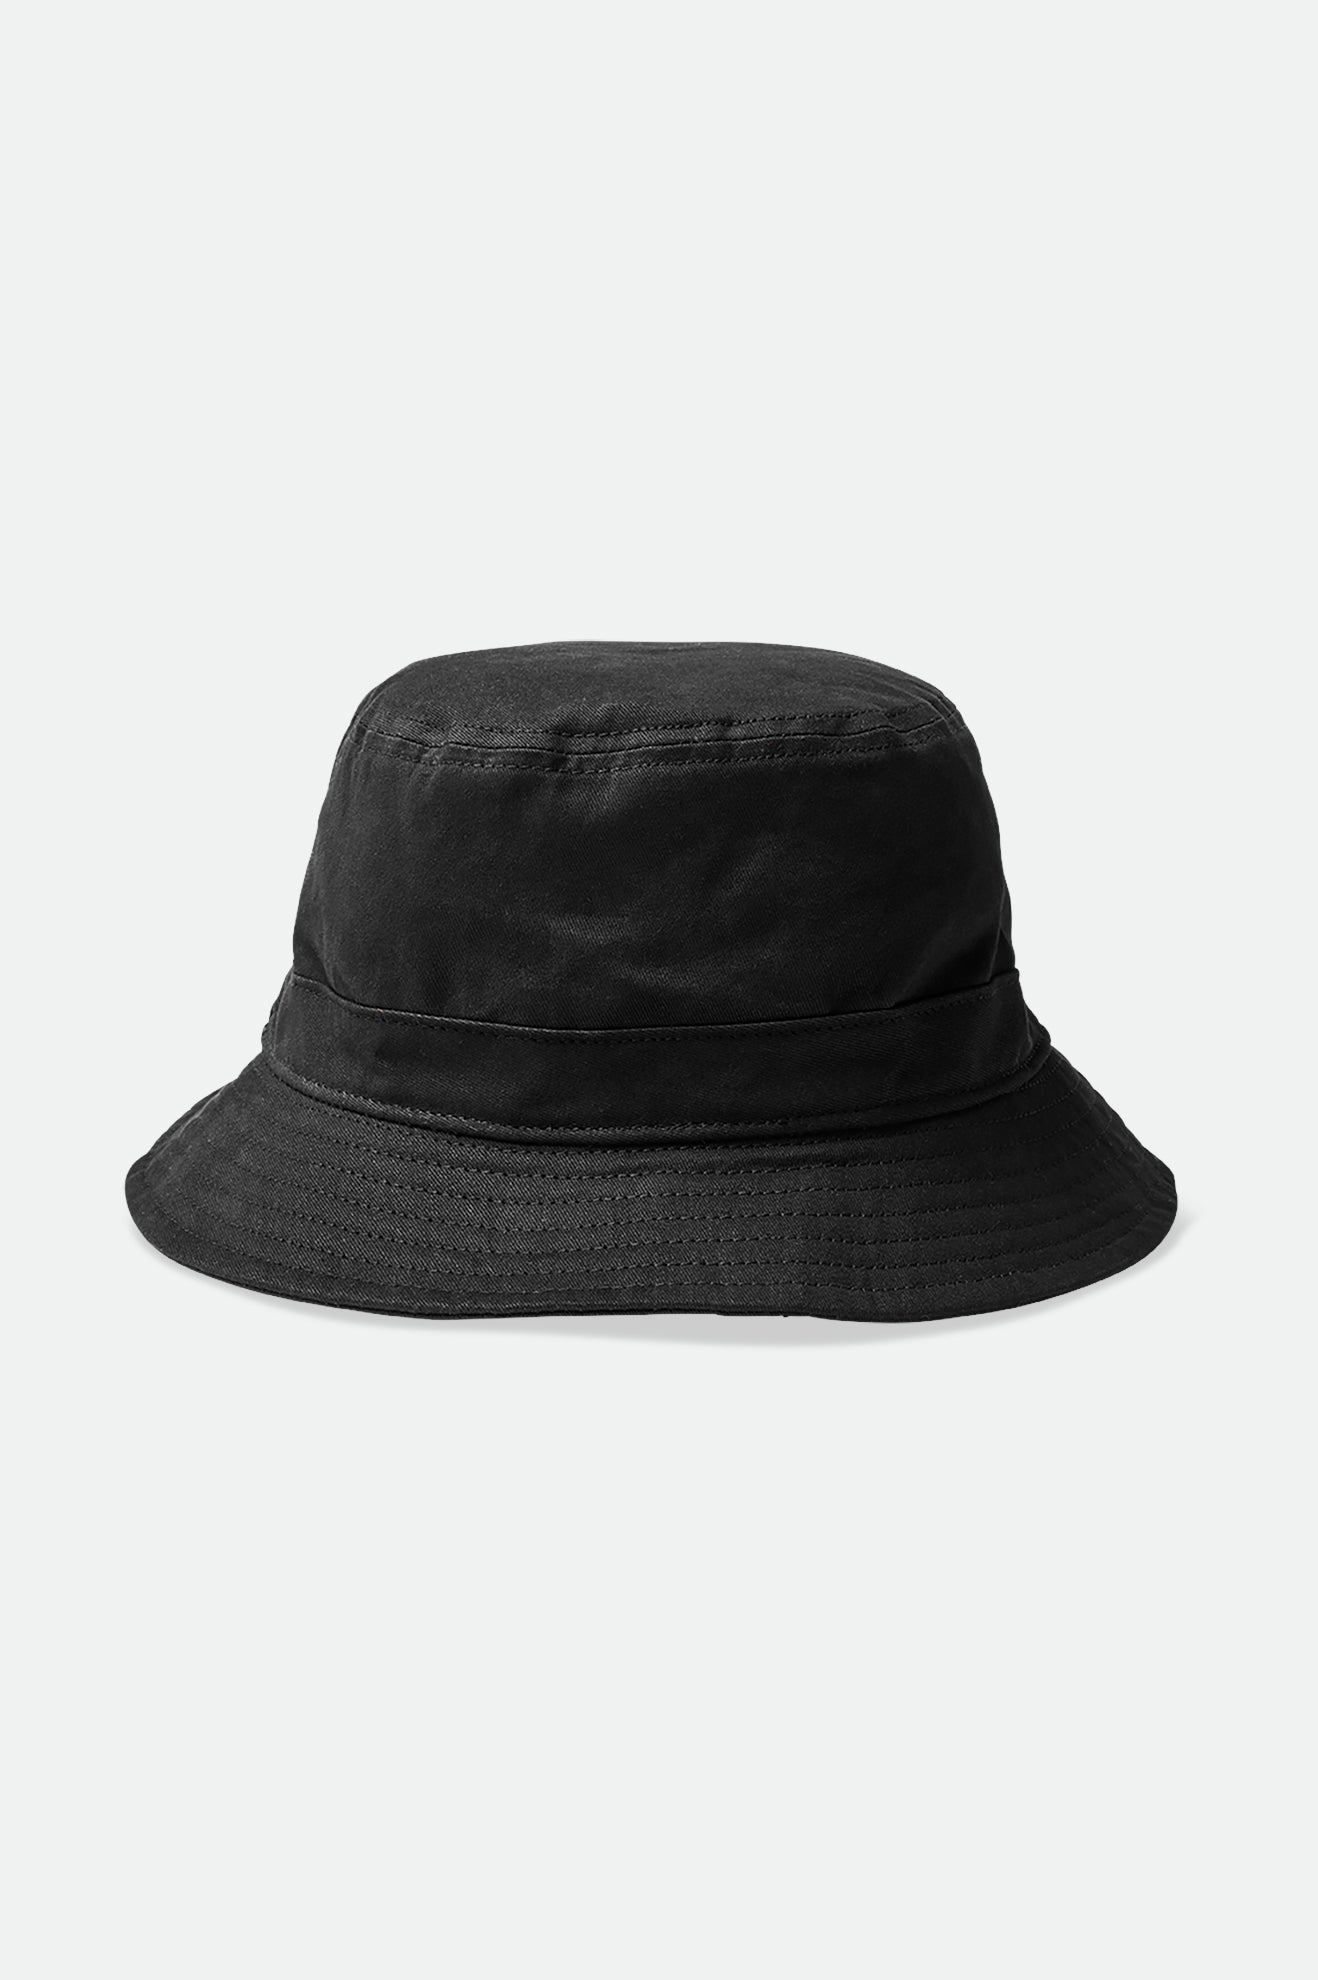 Quanhaigou Bucket Hat for Men Women, Packable Reversible